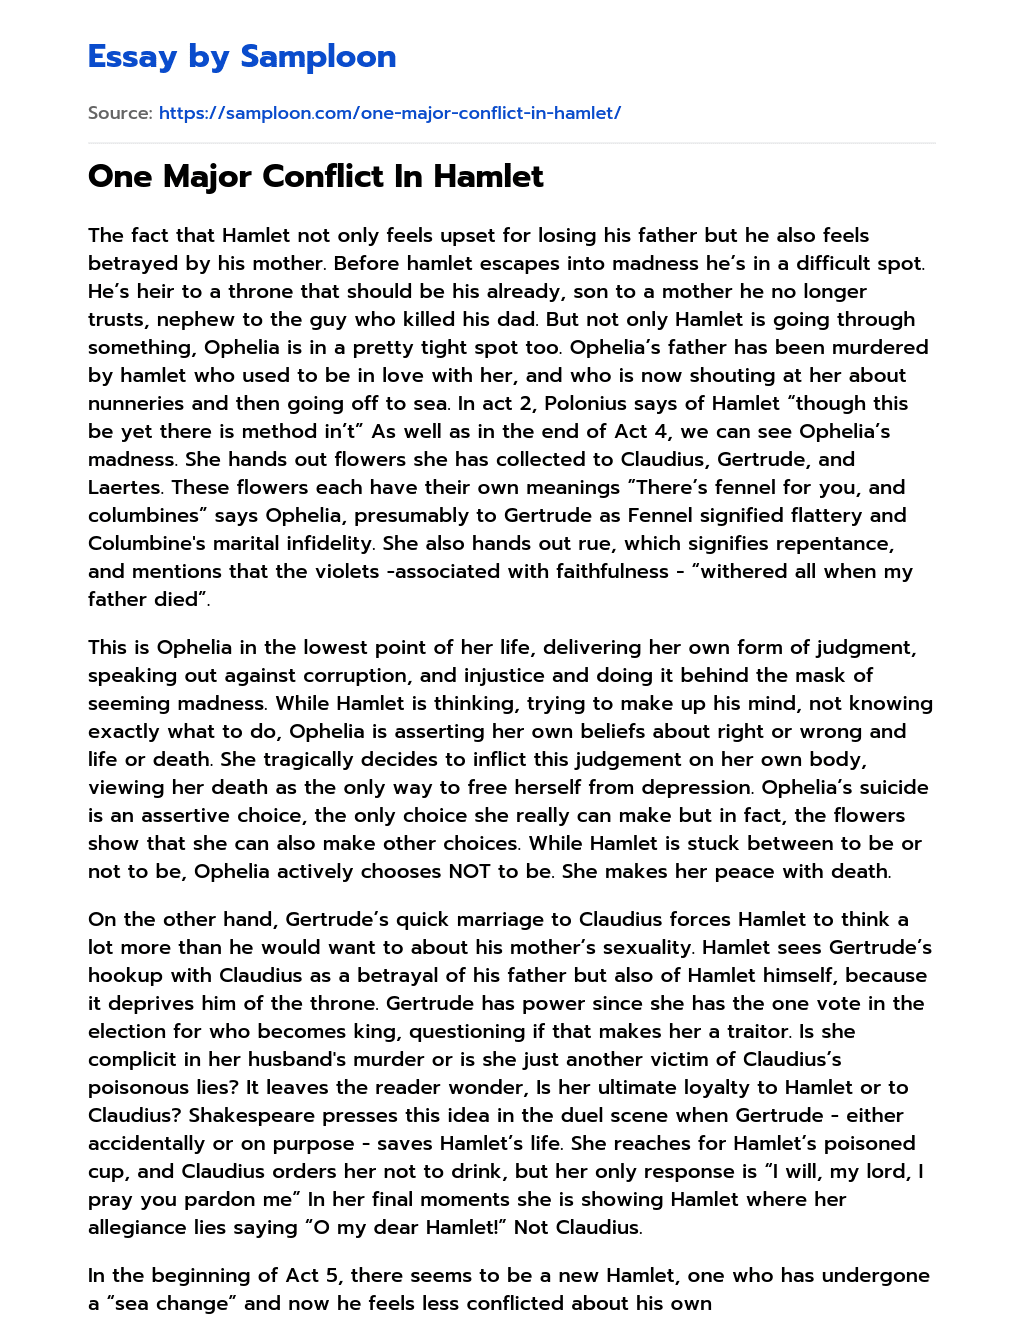 hamlet internal conflict essay